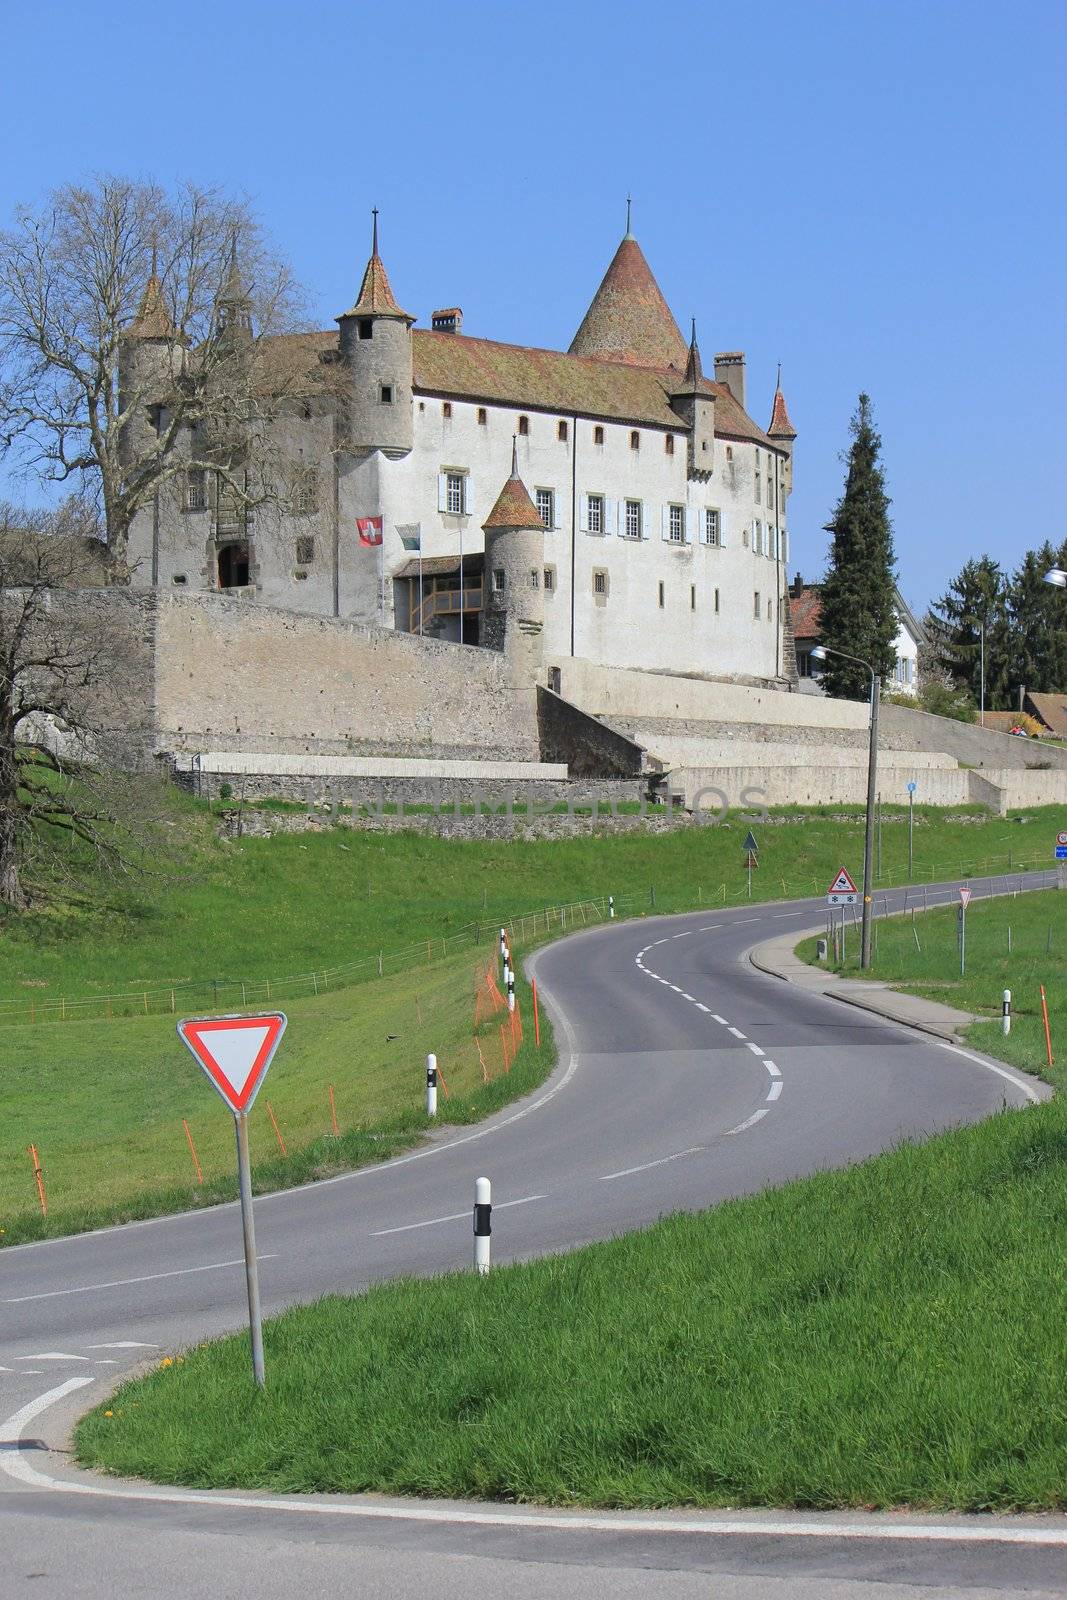 Old castle of Oron, Vaud canton, Switzerland by Elenaphotos21